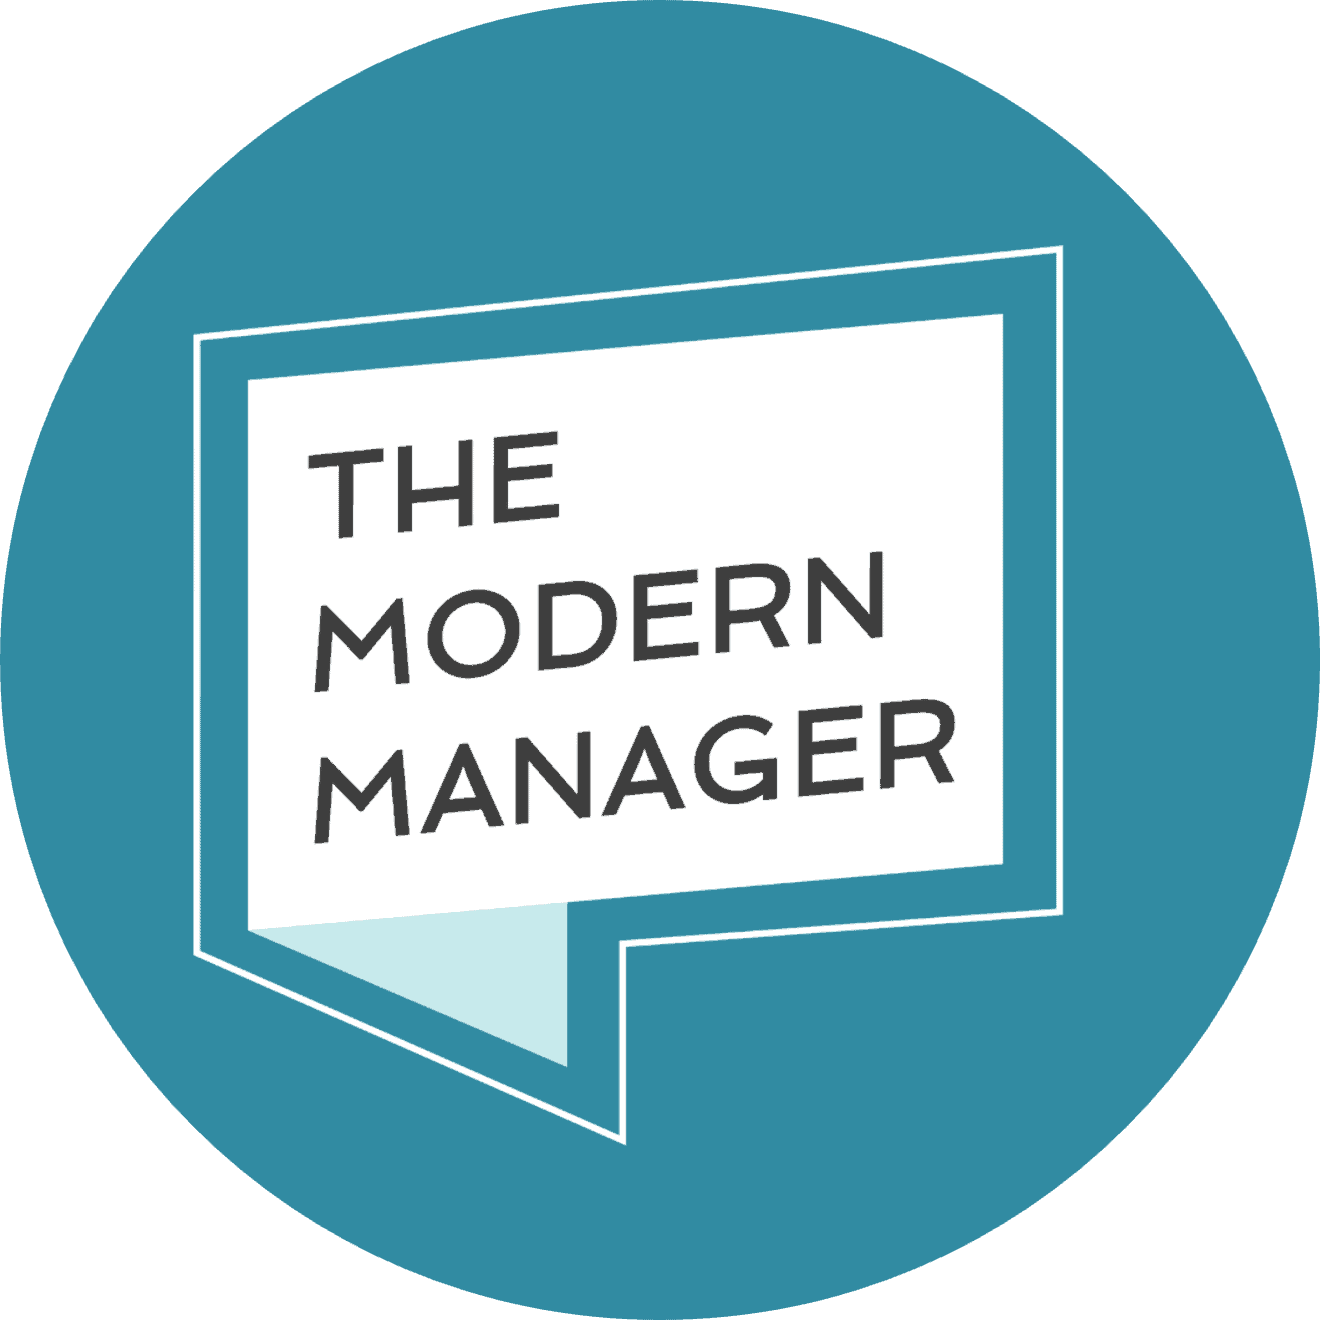 Modern Manager Teal